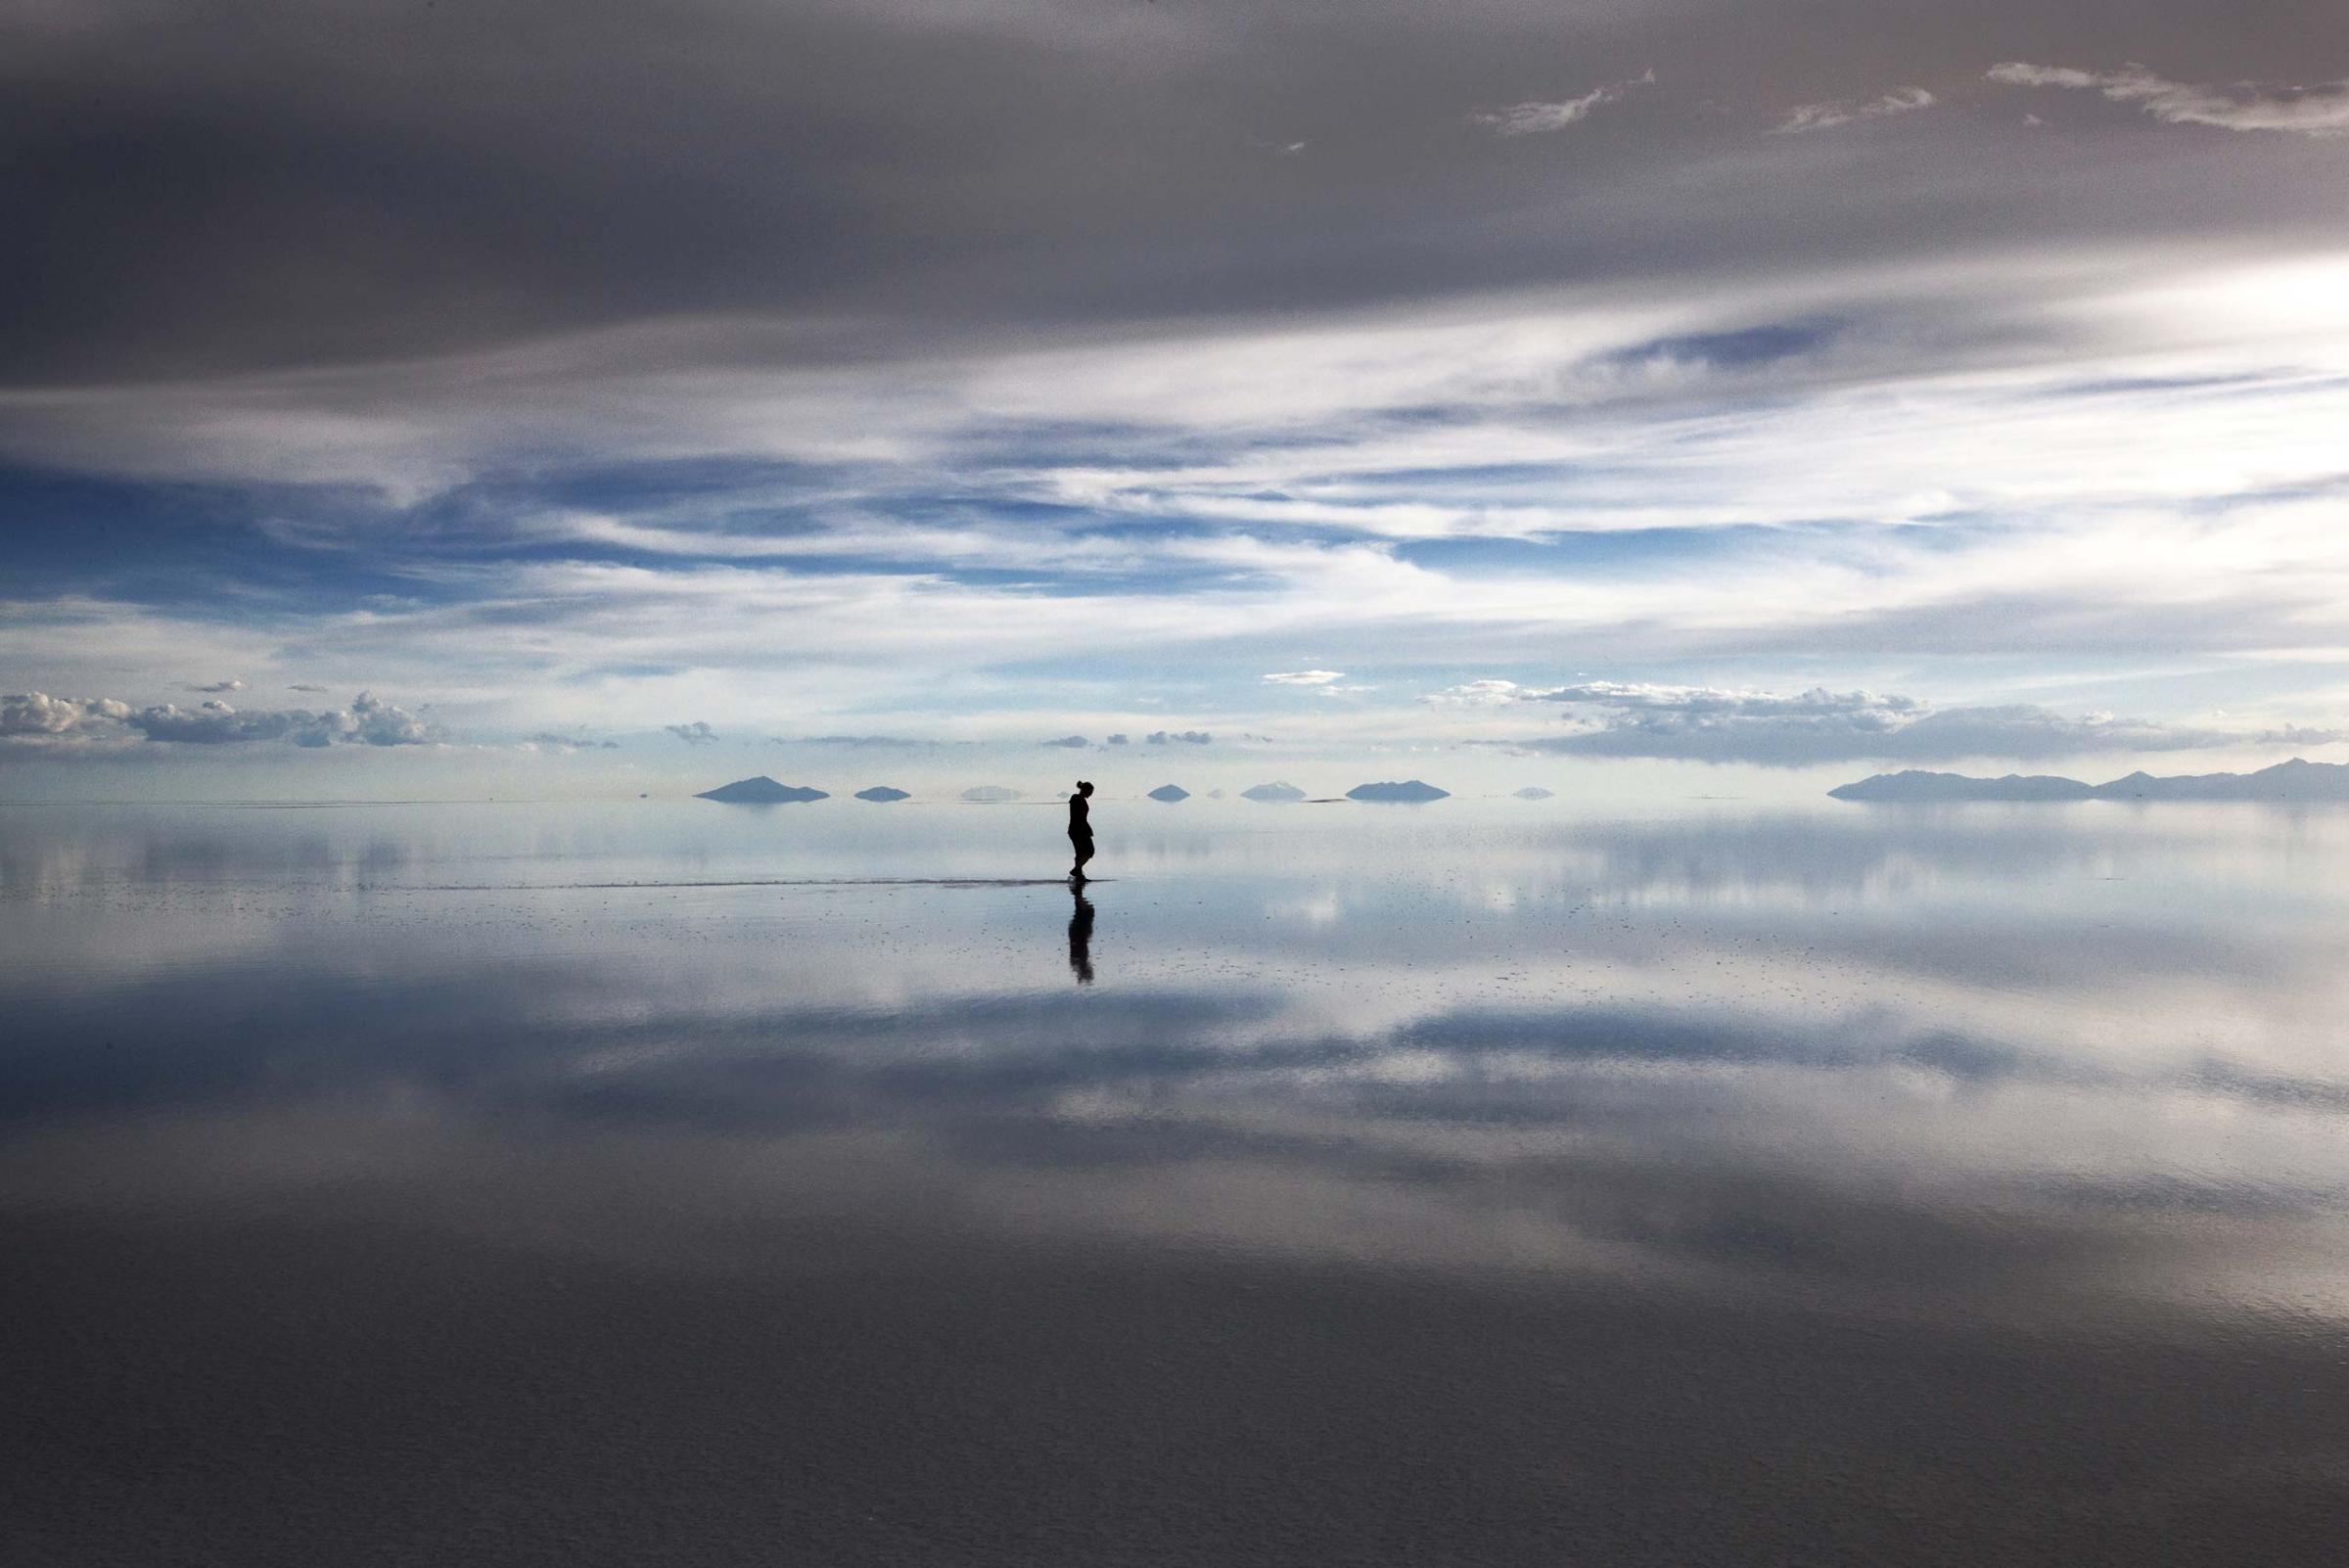 El Salar de Uyuni salt flat, Bolivia - Nov 2013